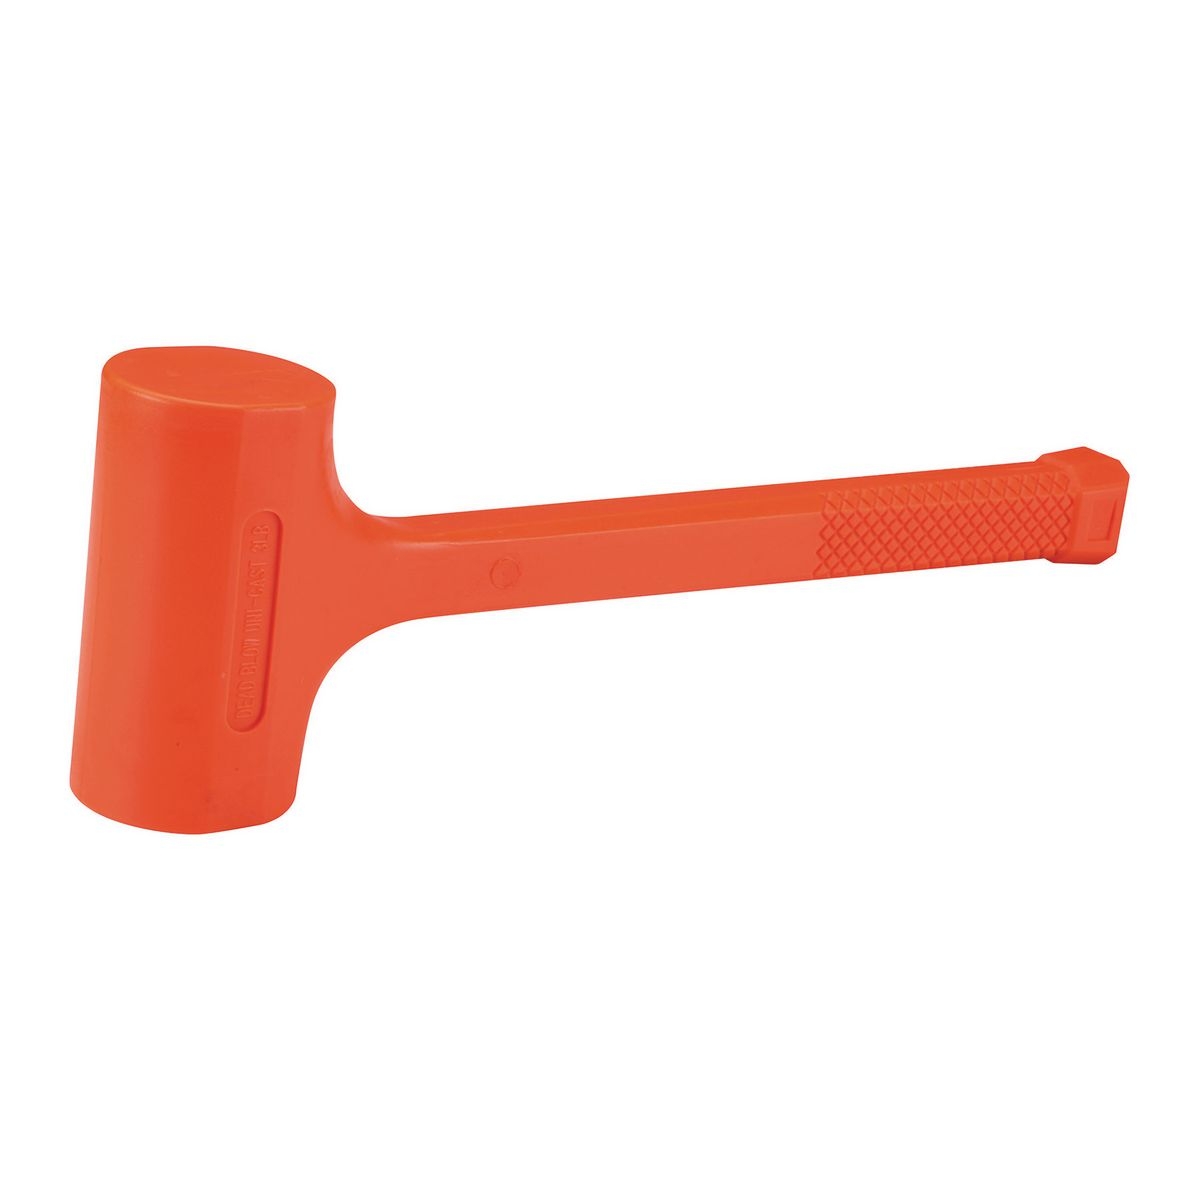 PITTSBURGH 3 lb. Neon Orange Dead Blow Hammer - Item 69002 / 41799